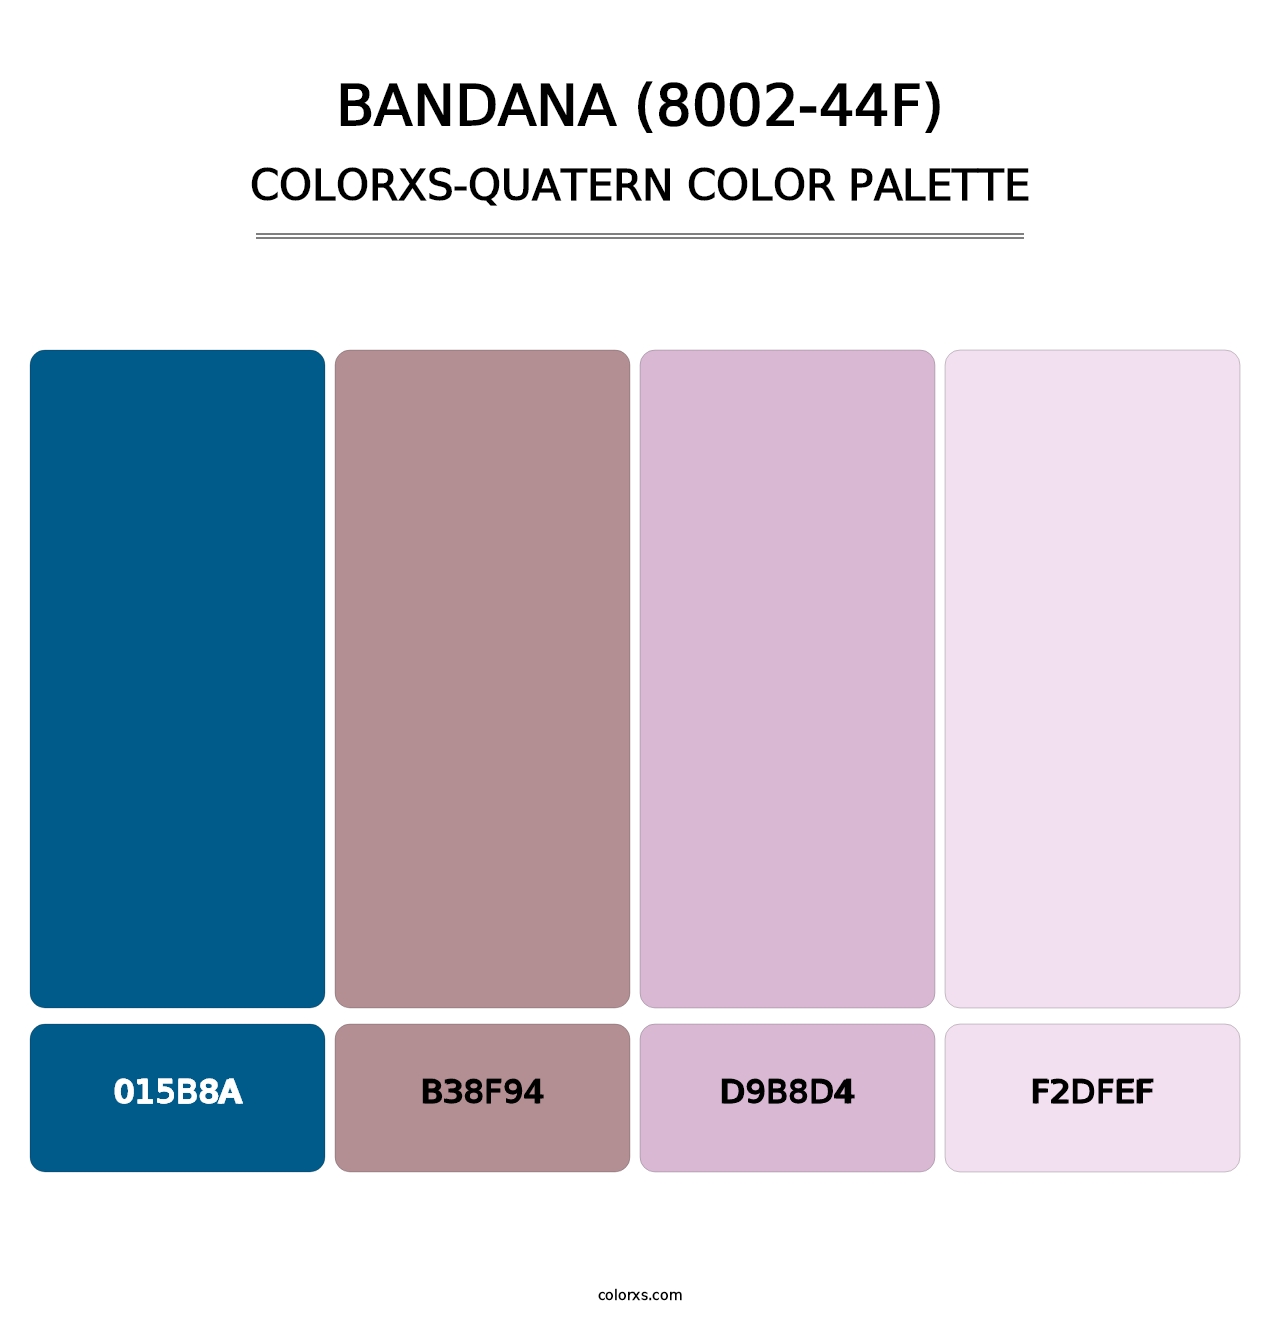 Bandana (8002-44F) - Colorxs Quatern Palette